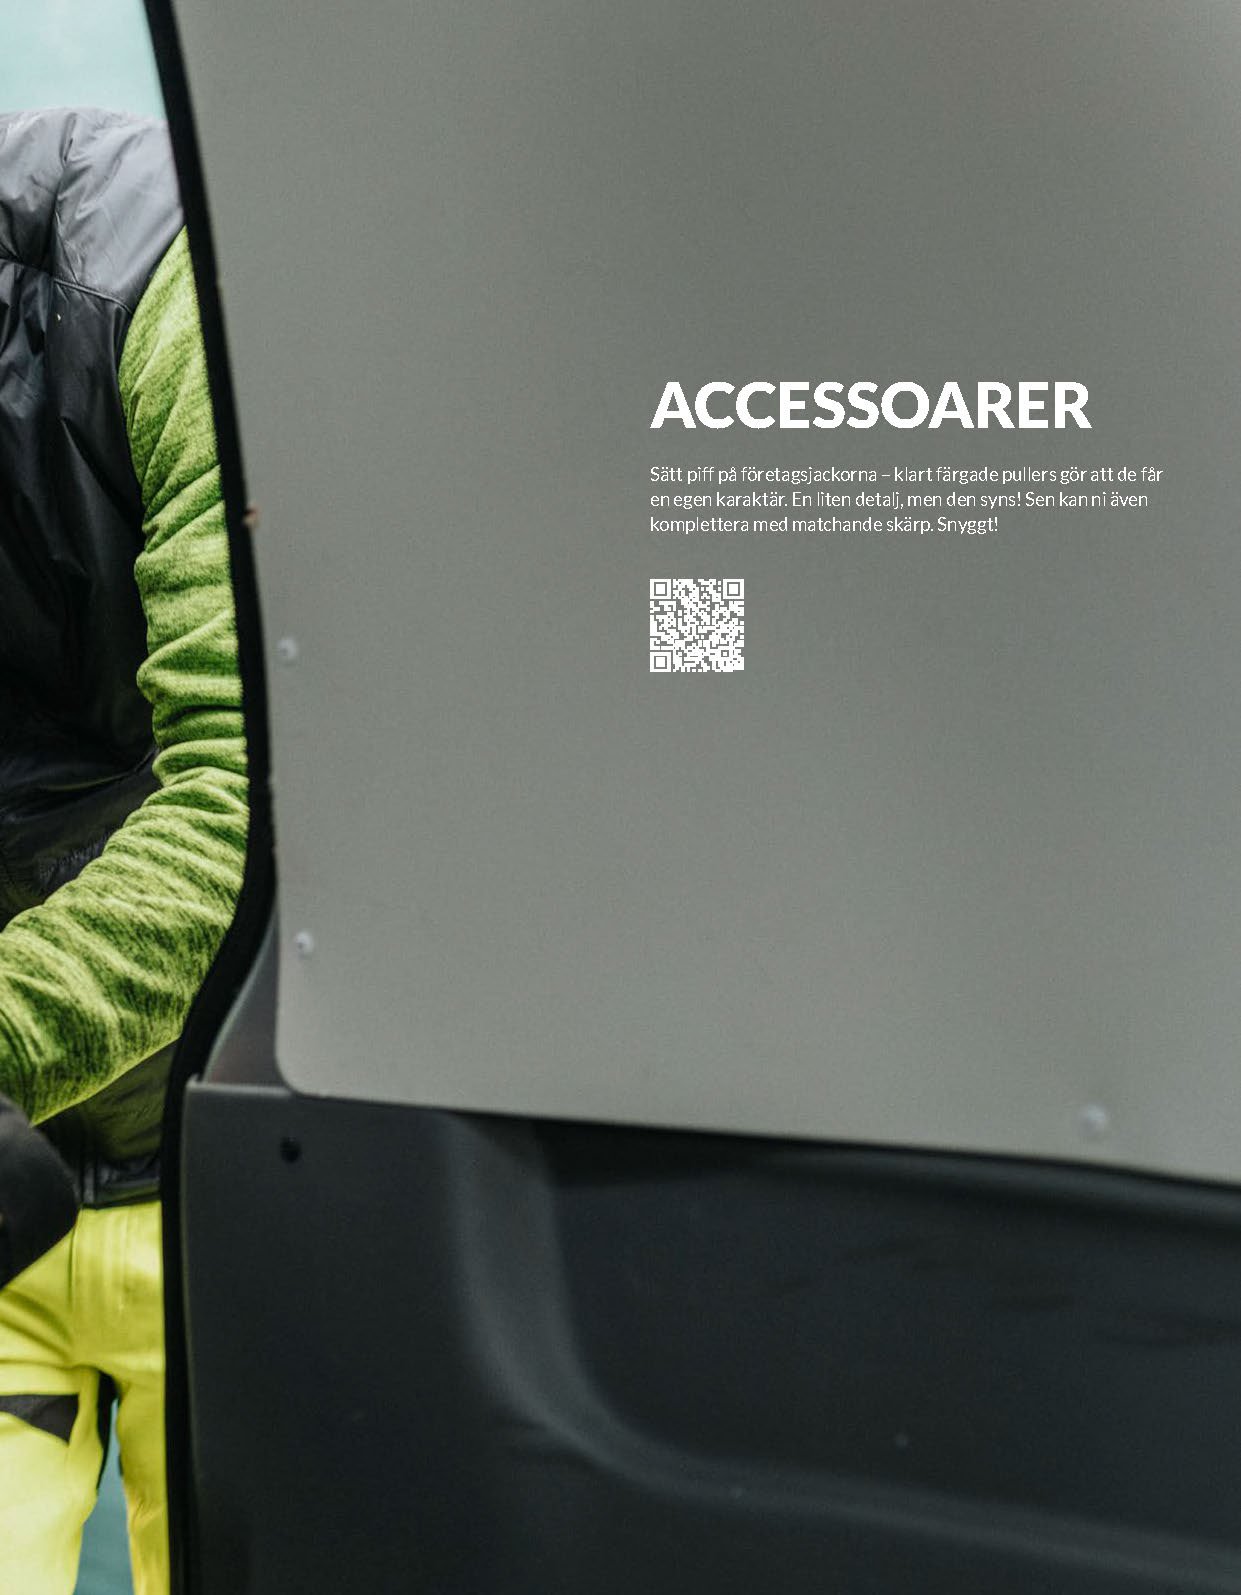 Accessoarer - Lindströms Reklam och Profil